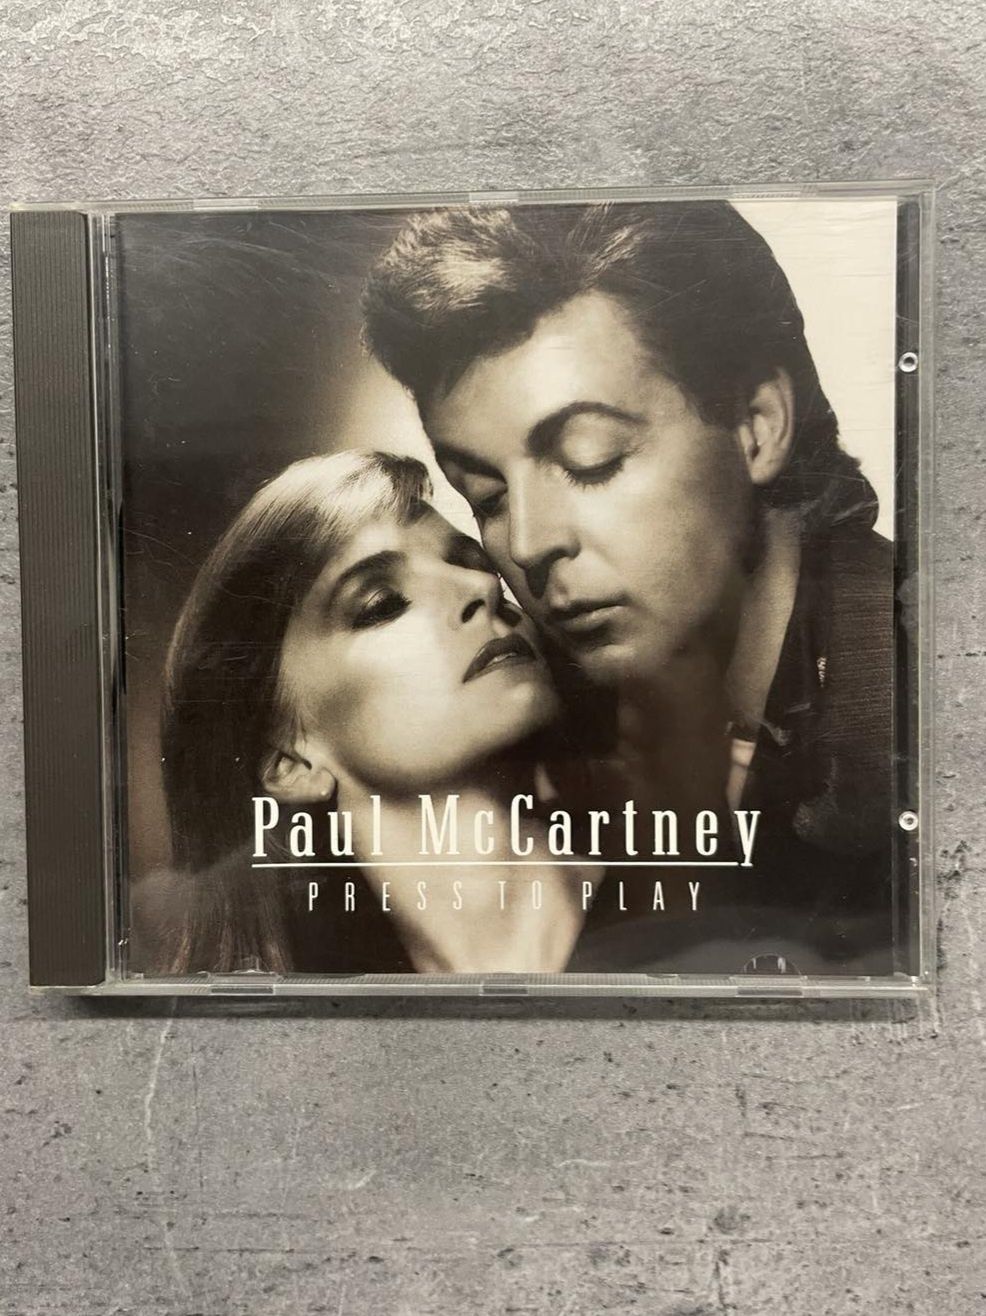 Paul Mccartney- Press to Play CD 1986